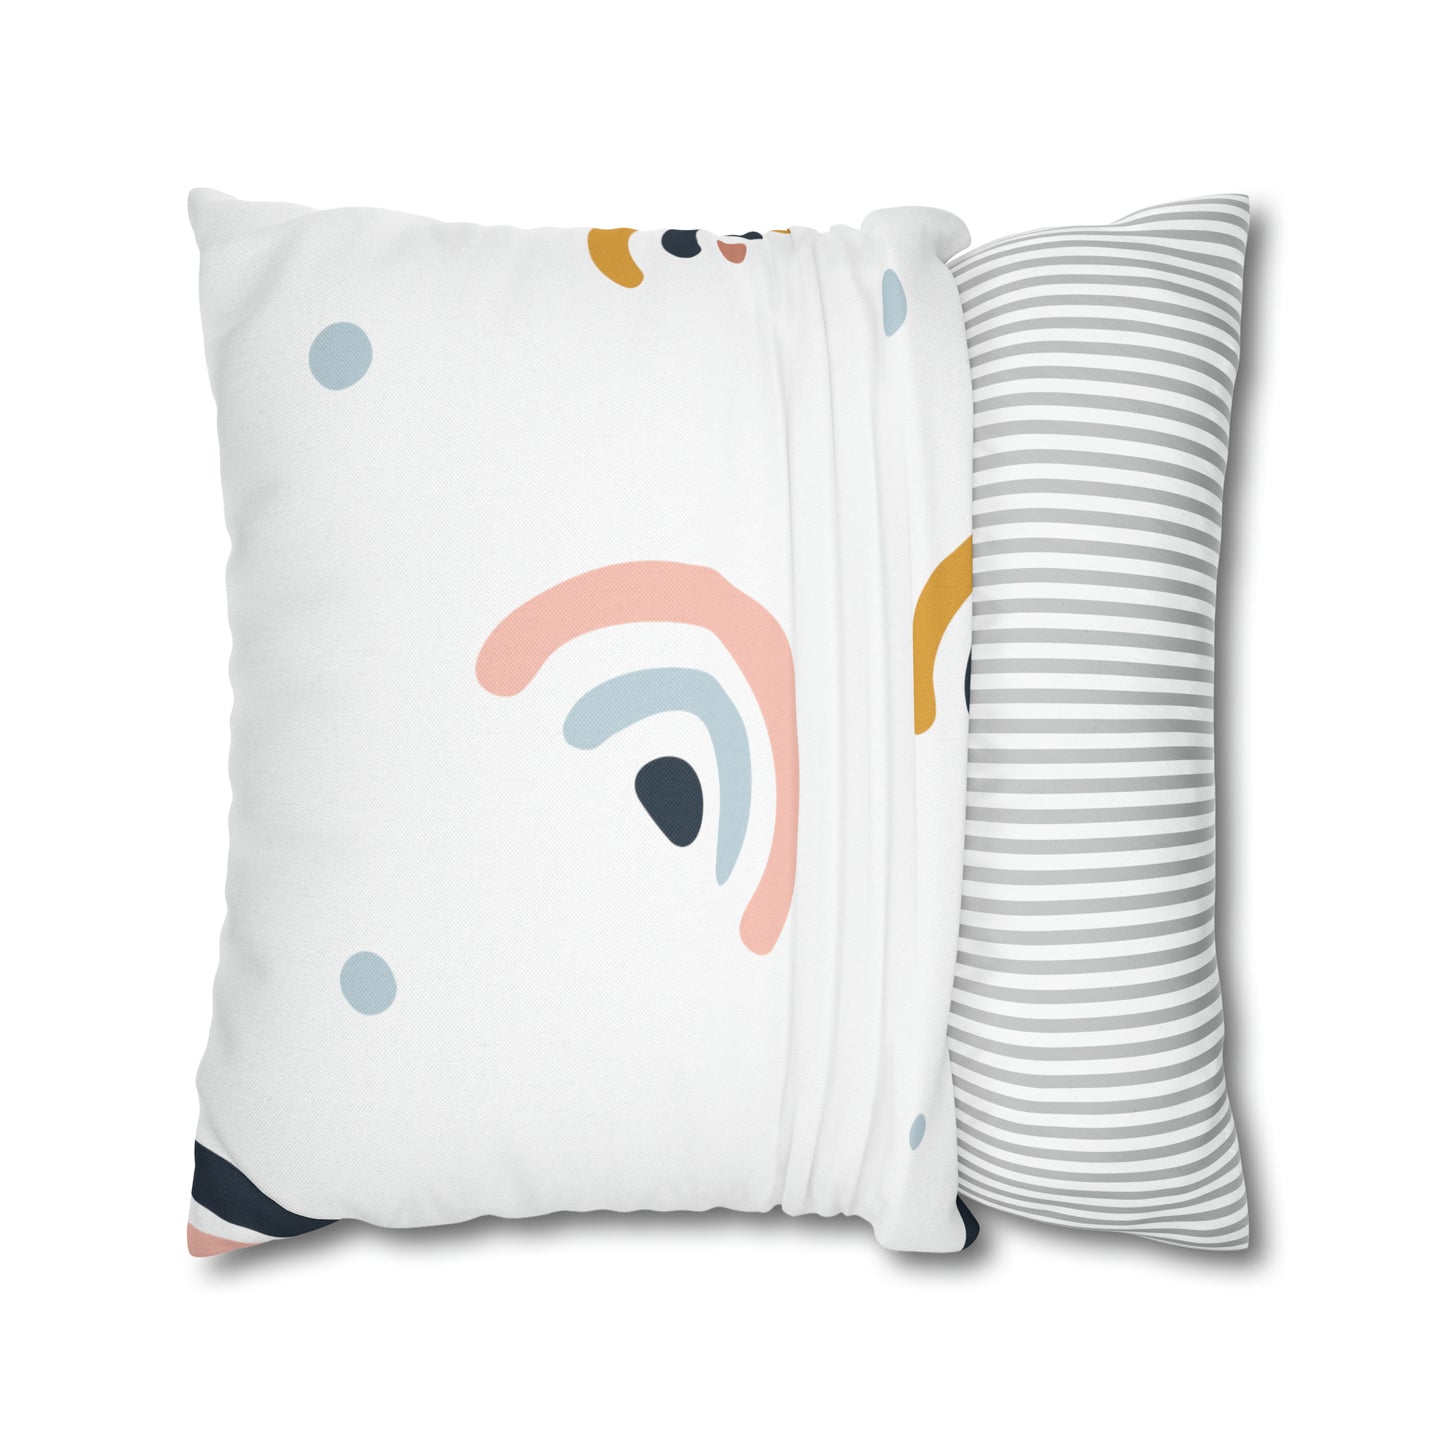 Festive Comfort: Christmas-themed Soft Fabric Cushion for Decor